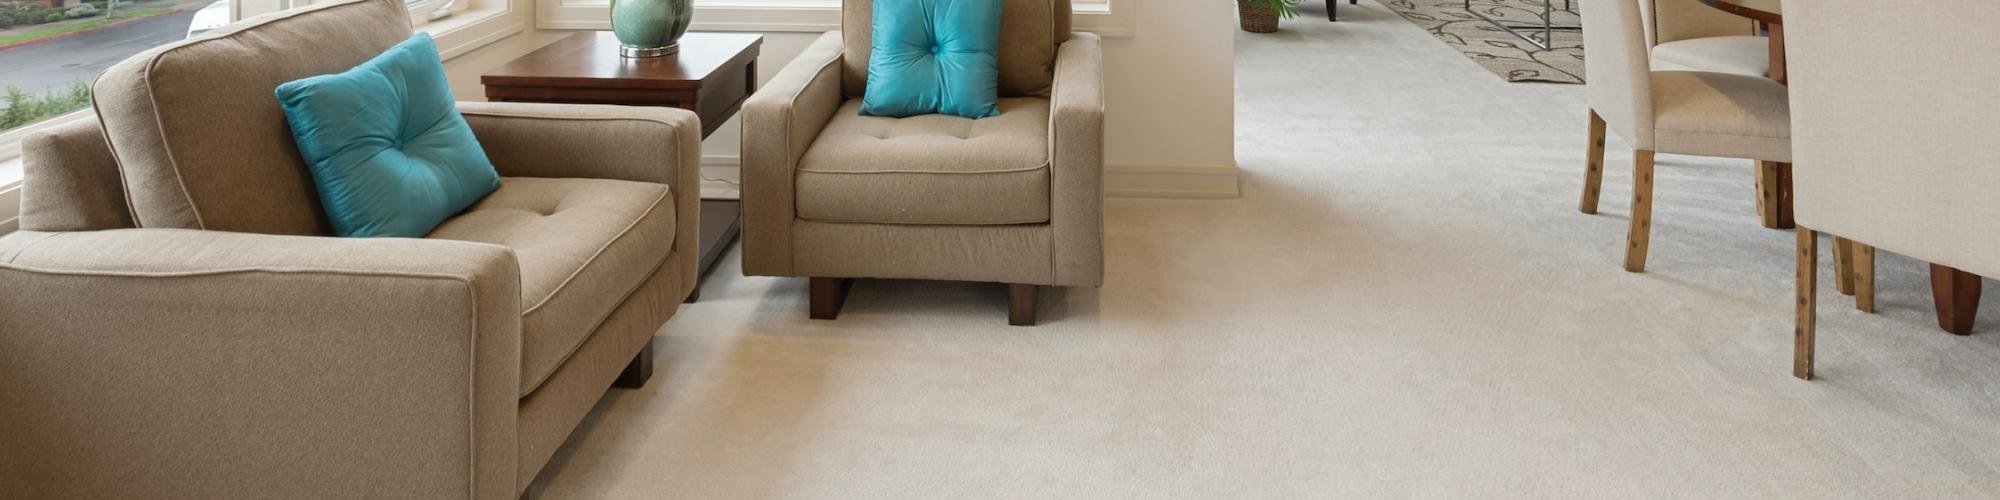 Soft light beige carpet in a living room